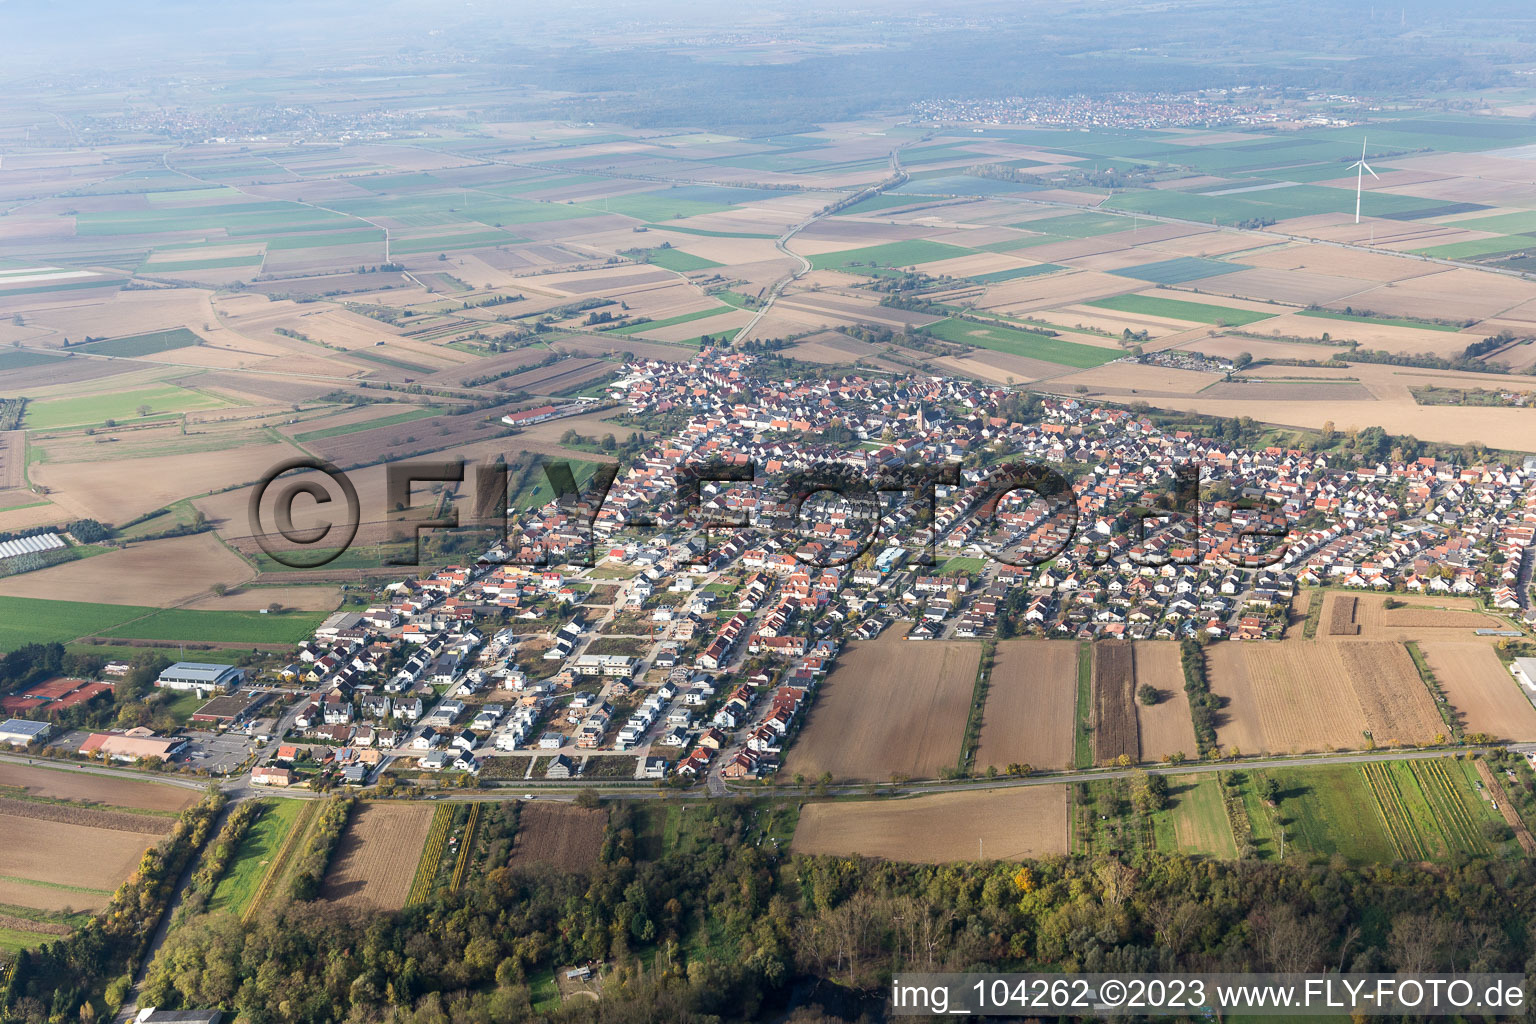 District Heiligenstein in Römerberg in the state Rhineland-Palatinate, Germany seen from above